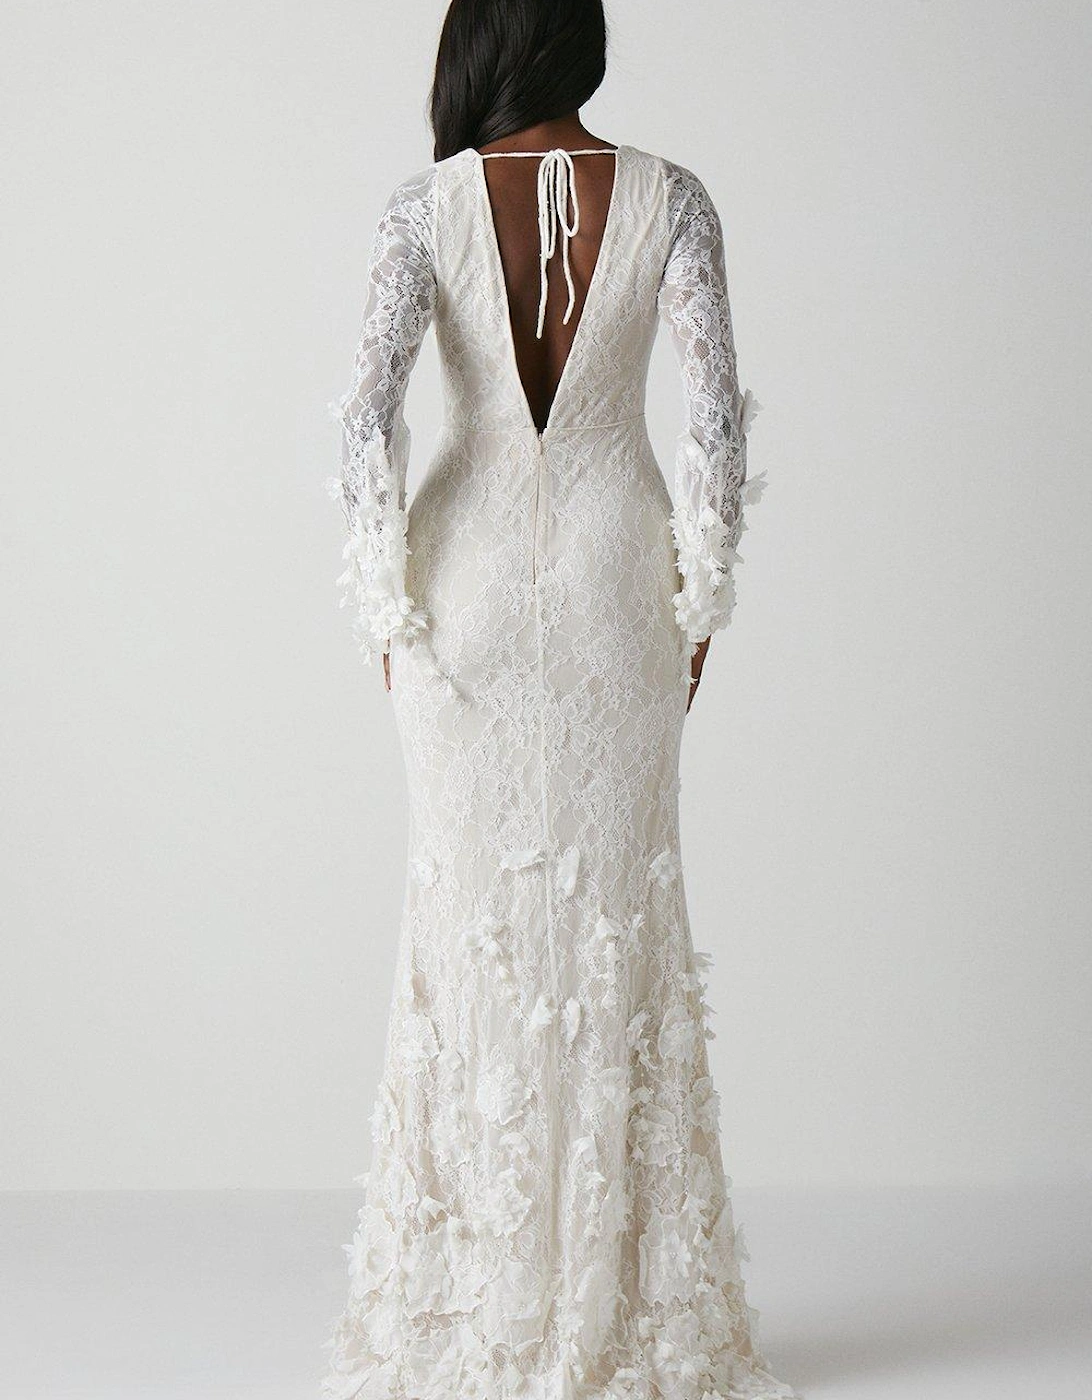 Premium Orchid Long Sleeve Lace Wedding Dress